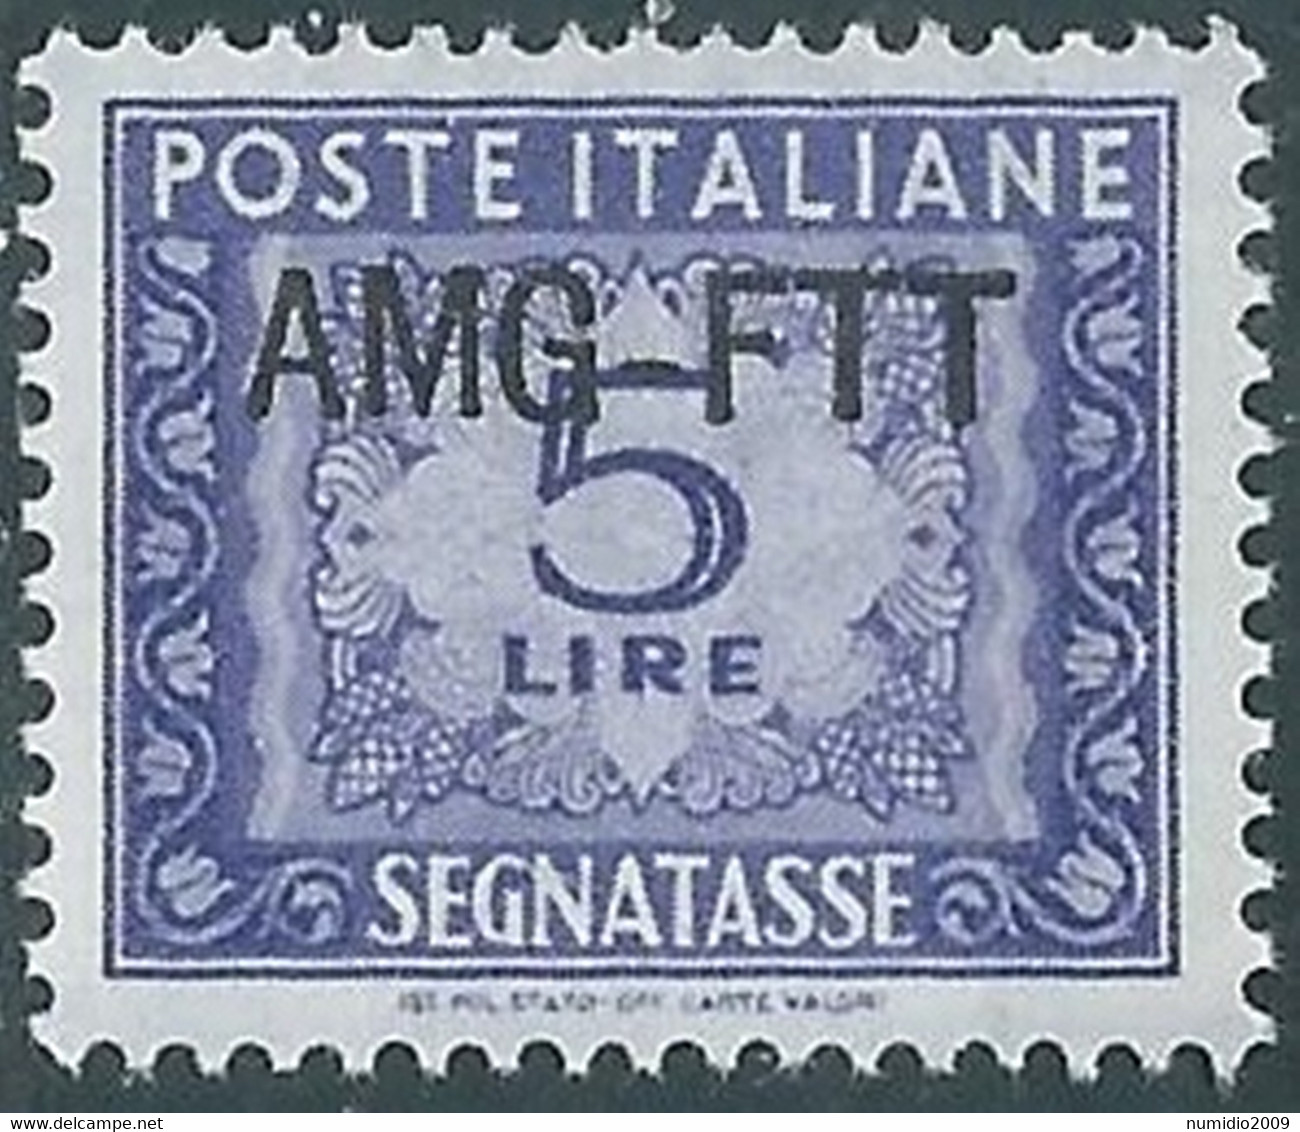 1949-54 TRIESTE A SEGNATASSE 5 LIRE MNH ** - RE11-7 - Taxe